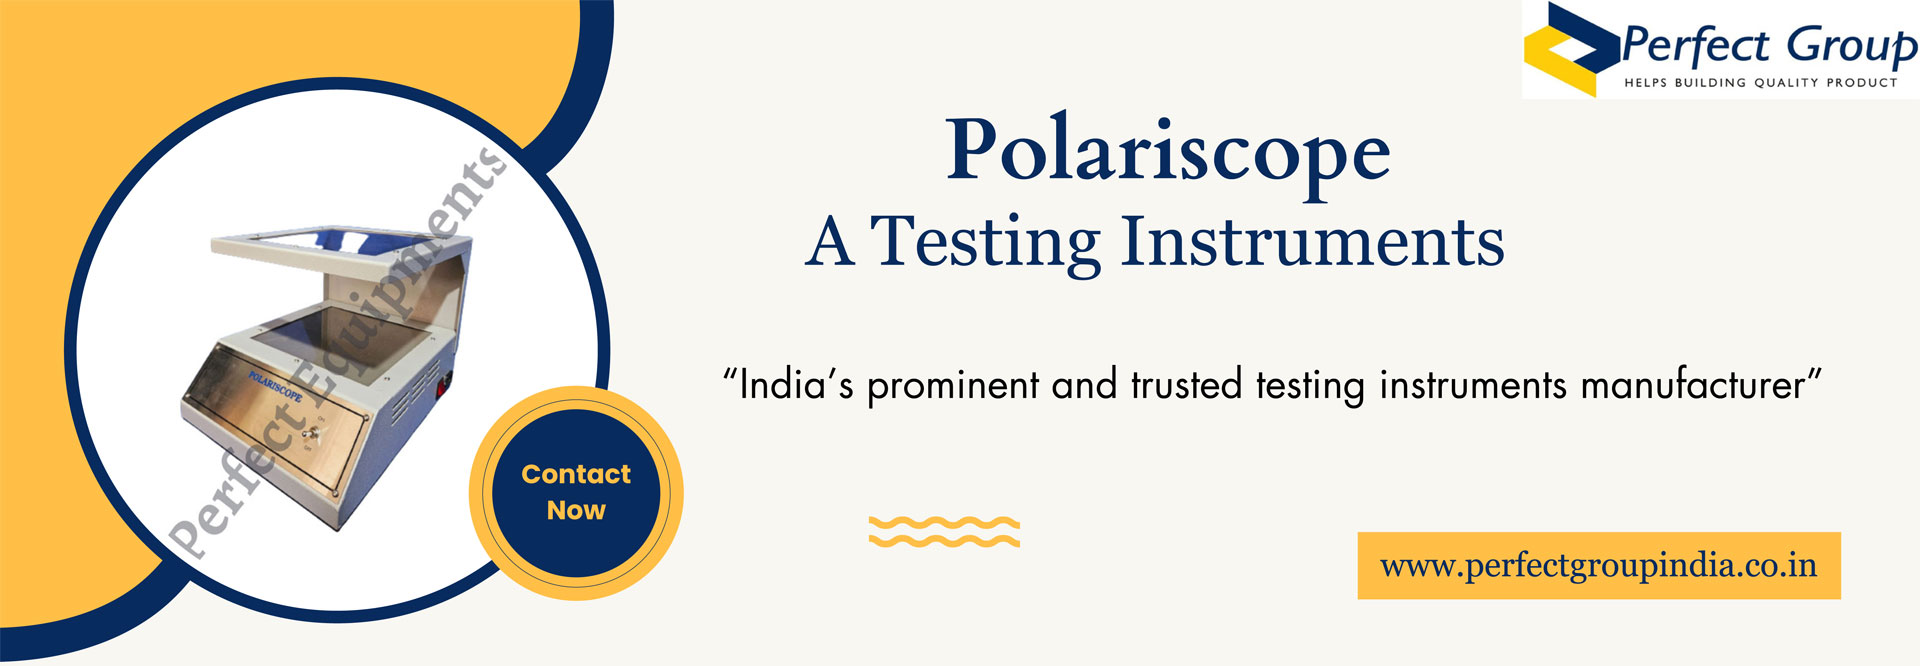 Polariscope: A Testing Instruments